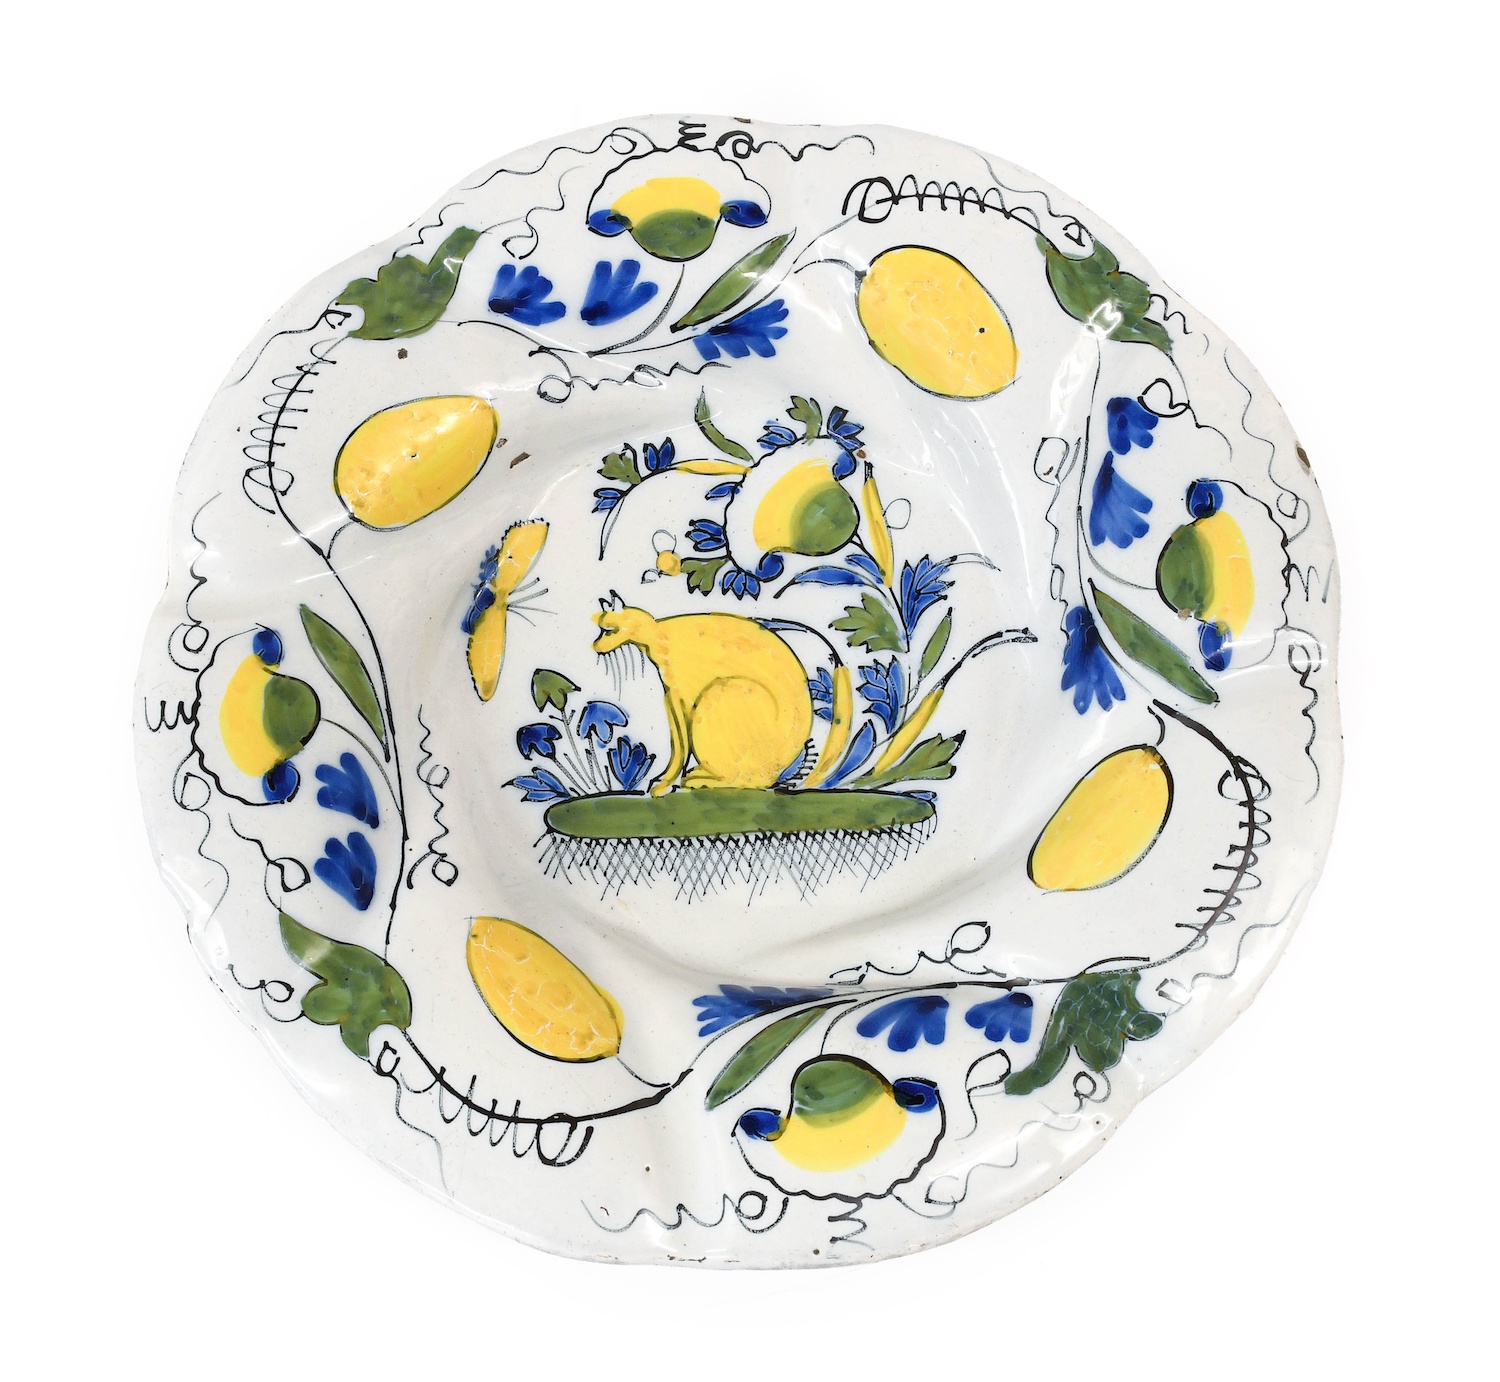 An antique Delft plate